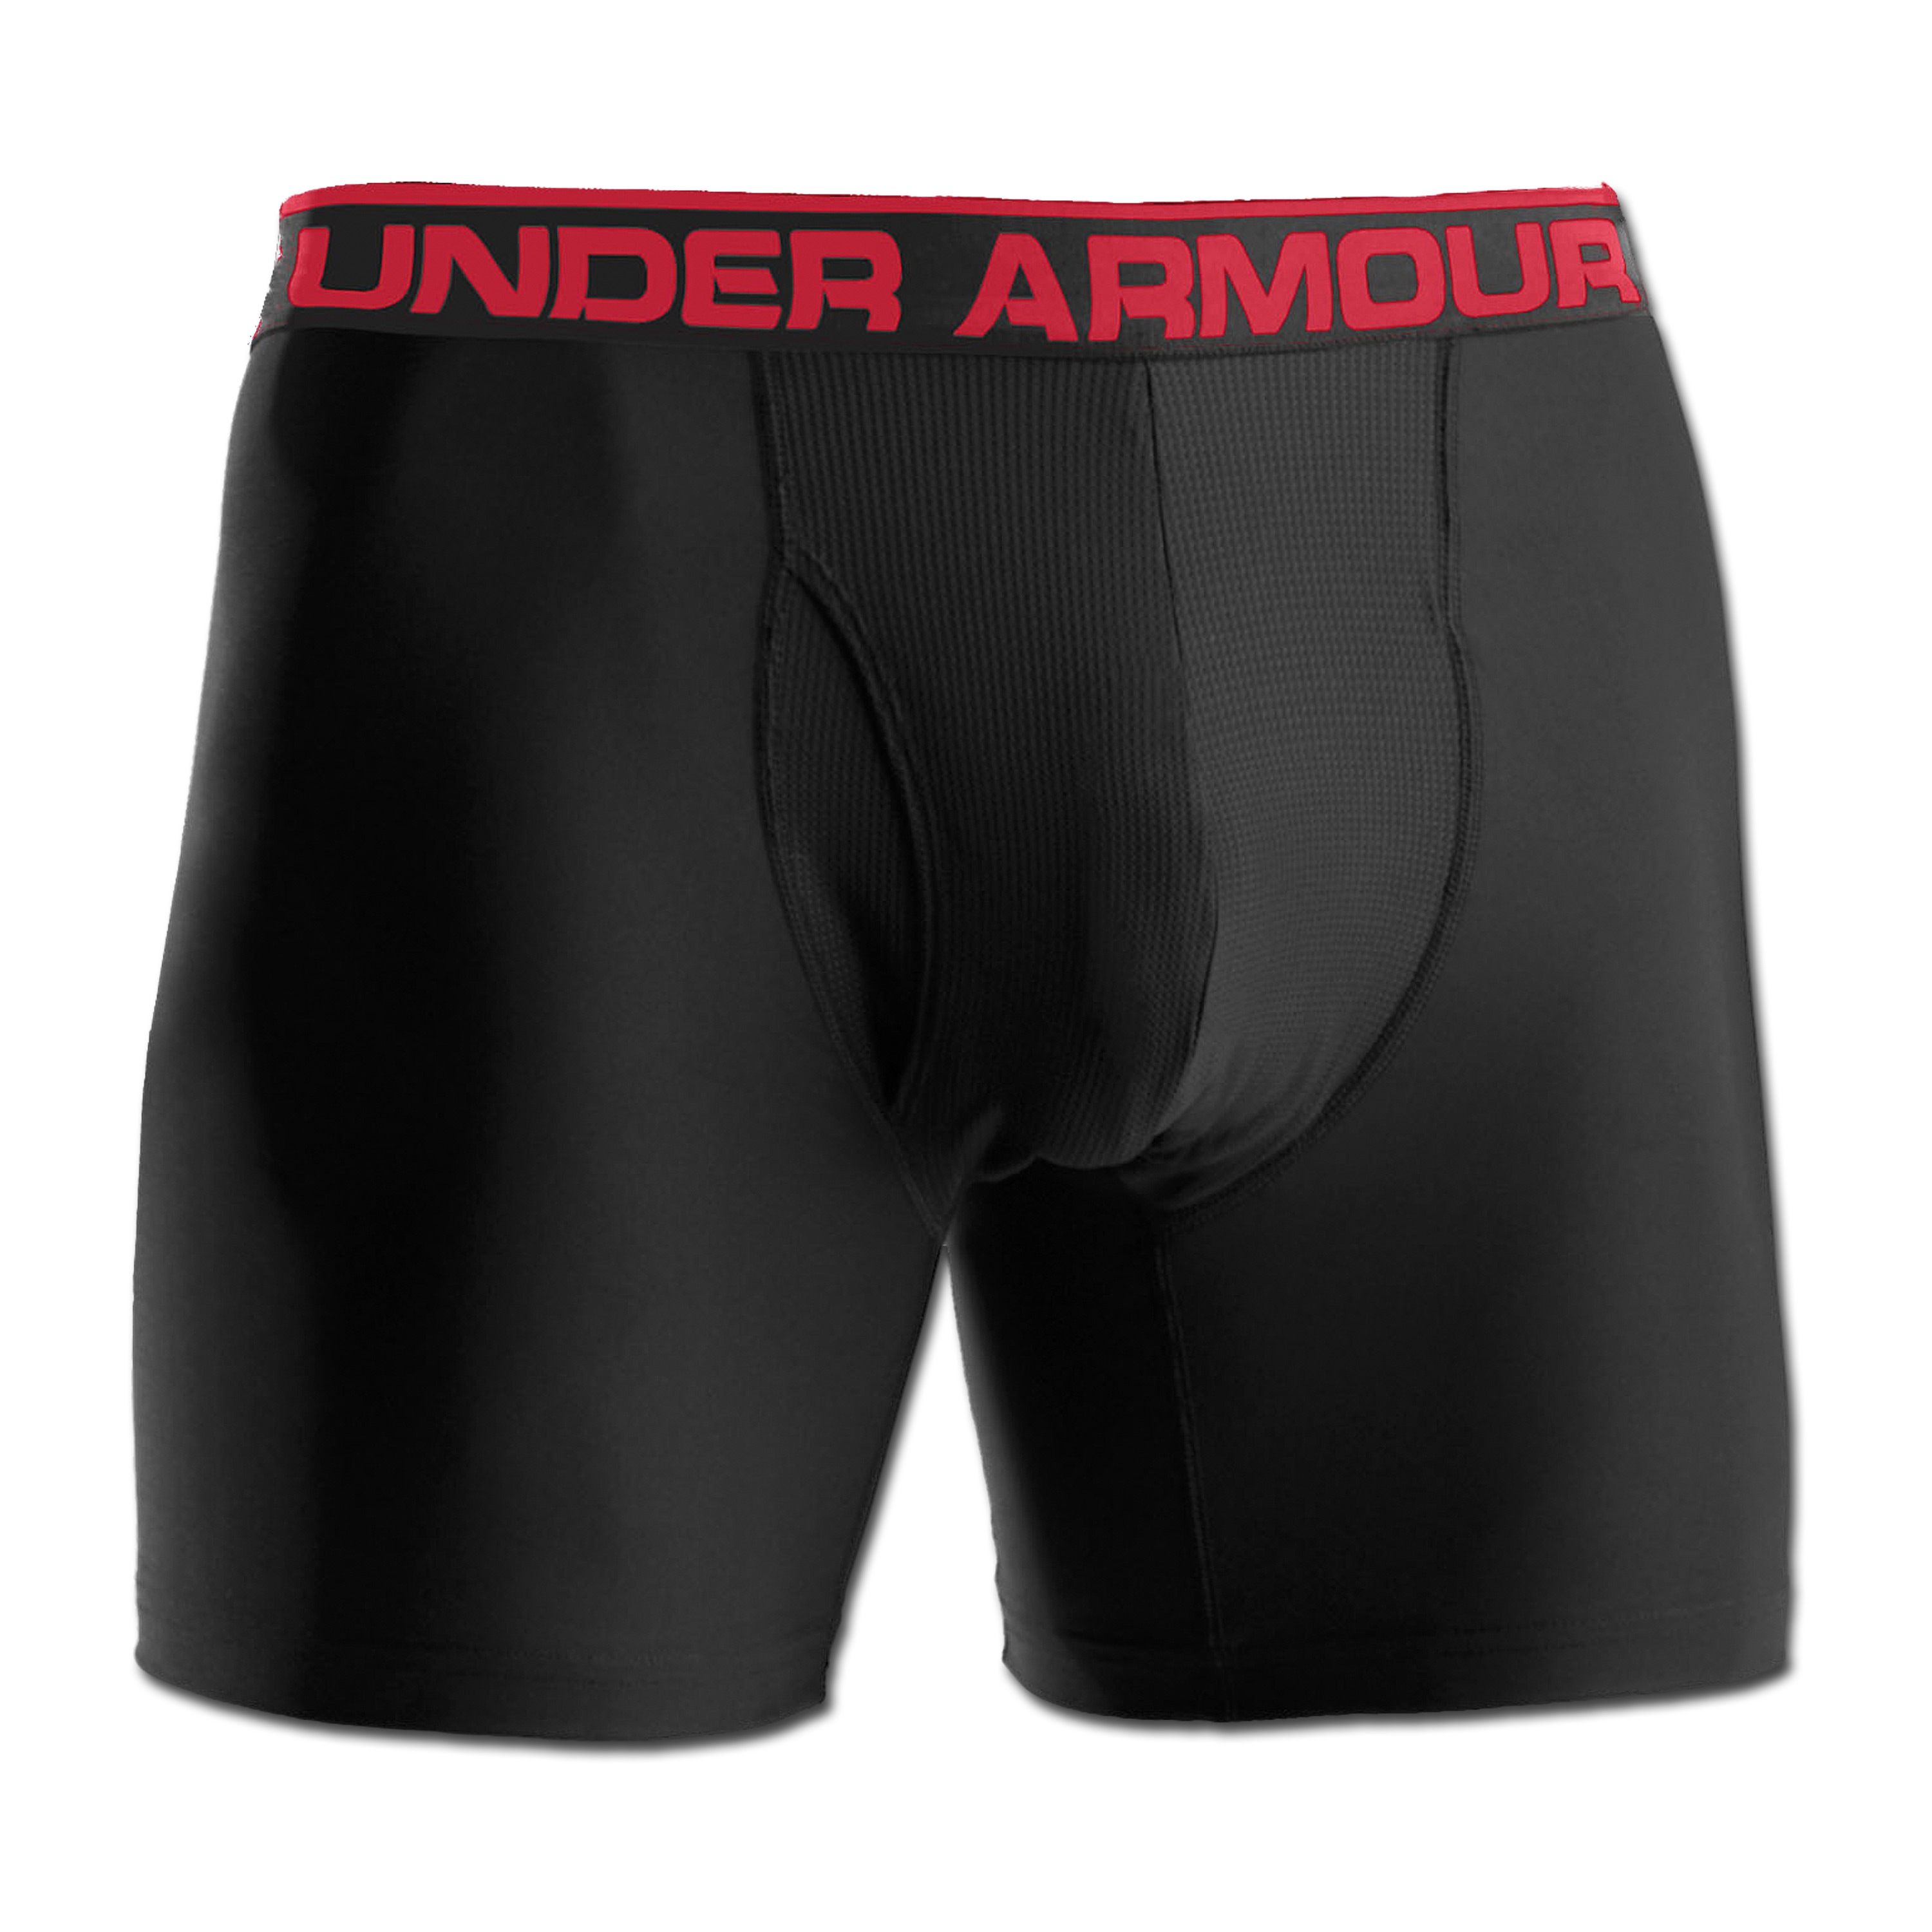 Under Armour Boxershorts 6, black | Under Armour Boxershorts 6, black ...